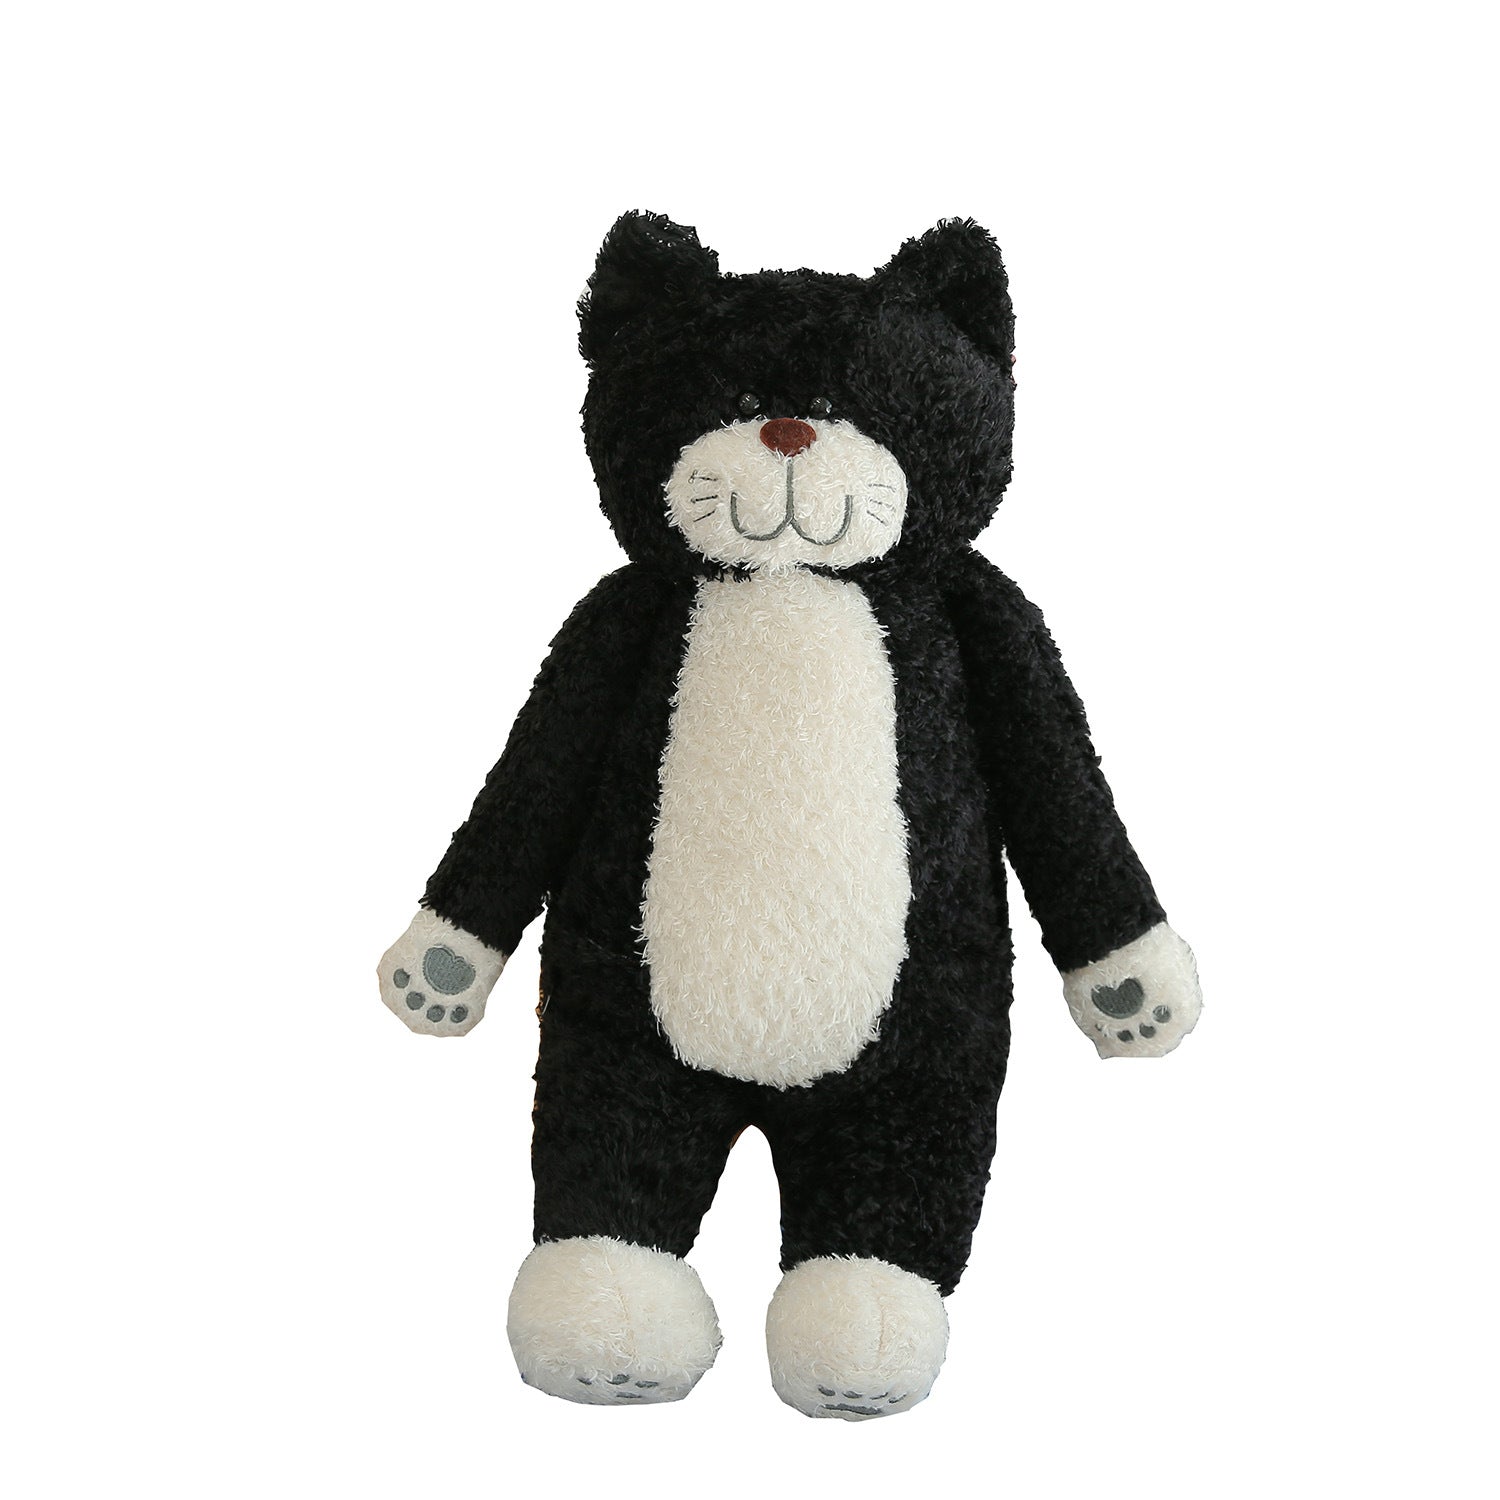 50CM Cat Pillow Plush Toys Cartoon Soft Stuffed Animal Dolls Mascot Birthday Xmas Gift Home Decor